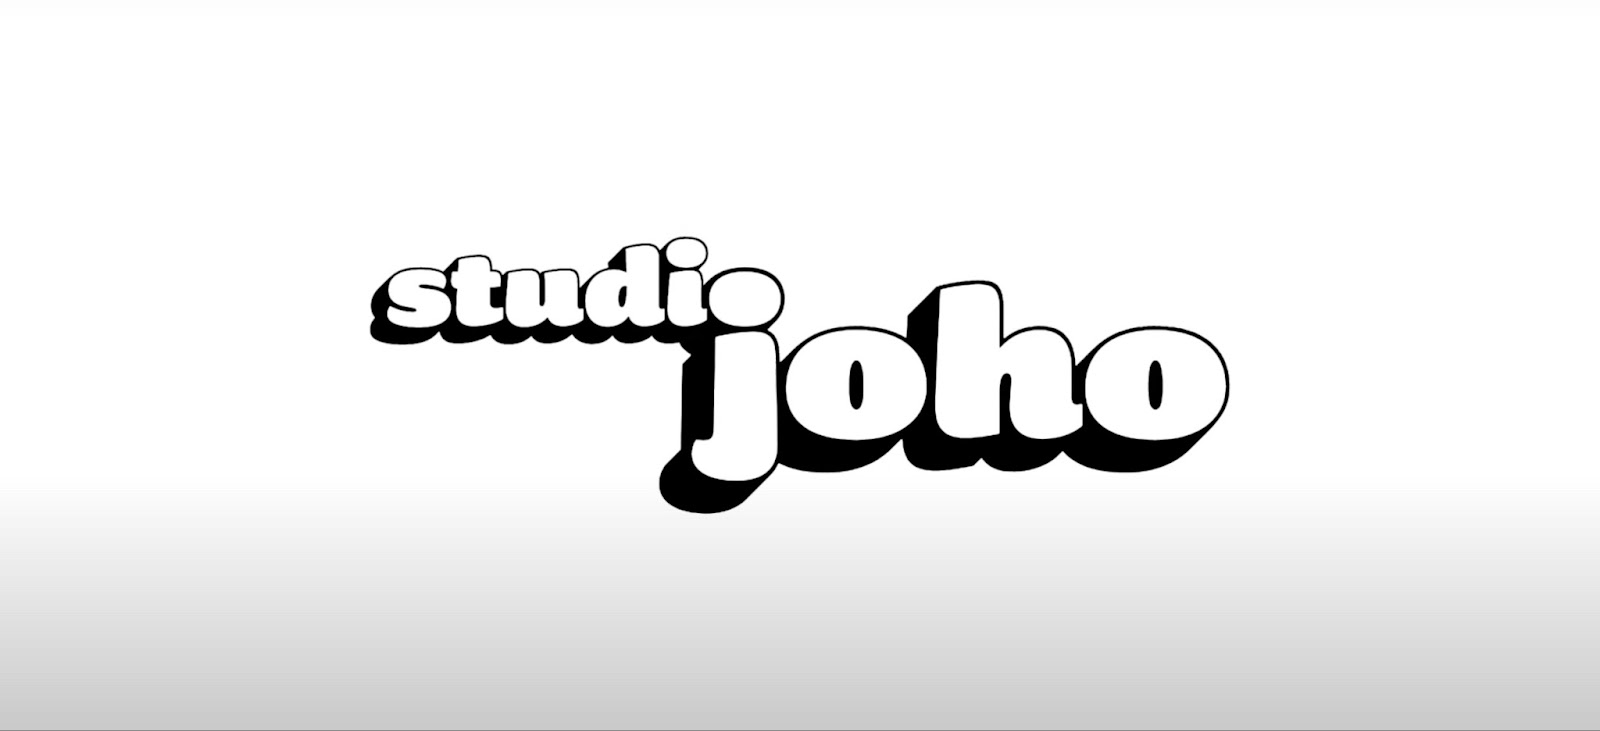 Studio Joho Creative Foray: John Perkins’ Book Promotion